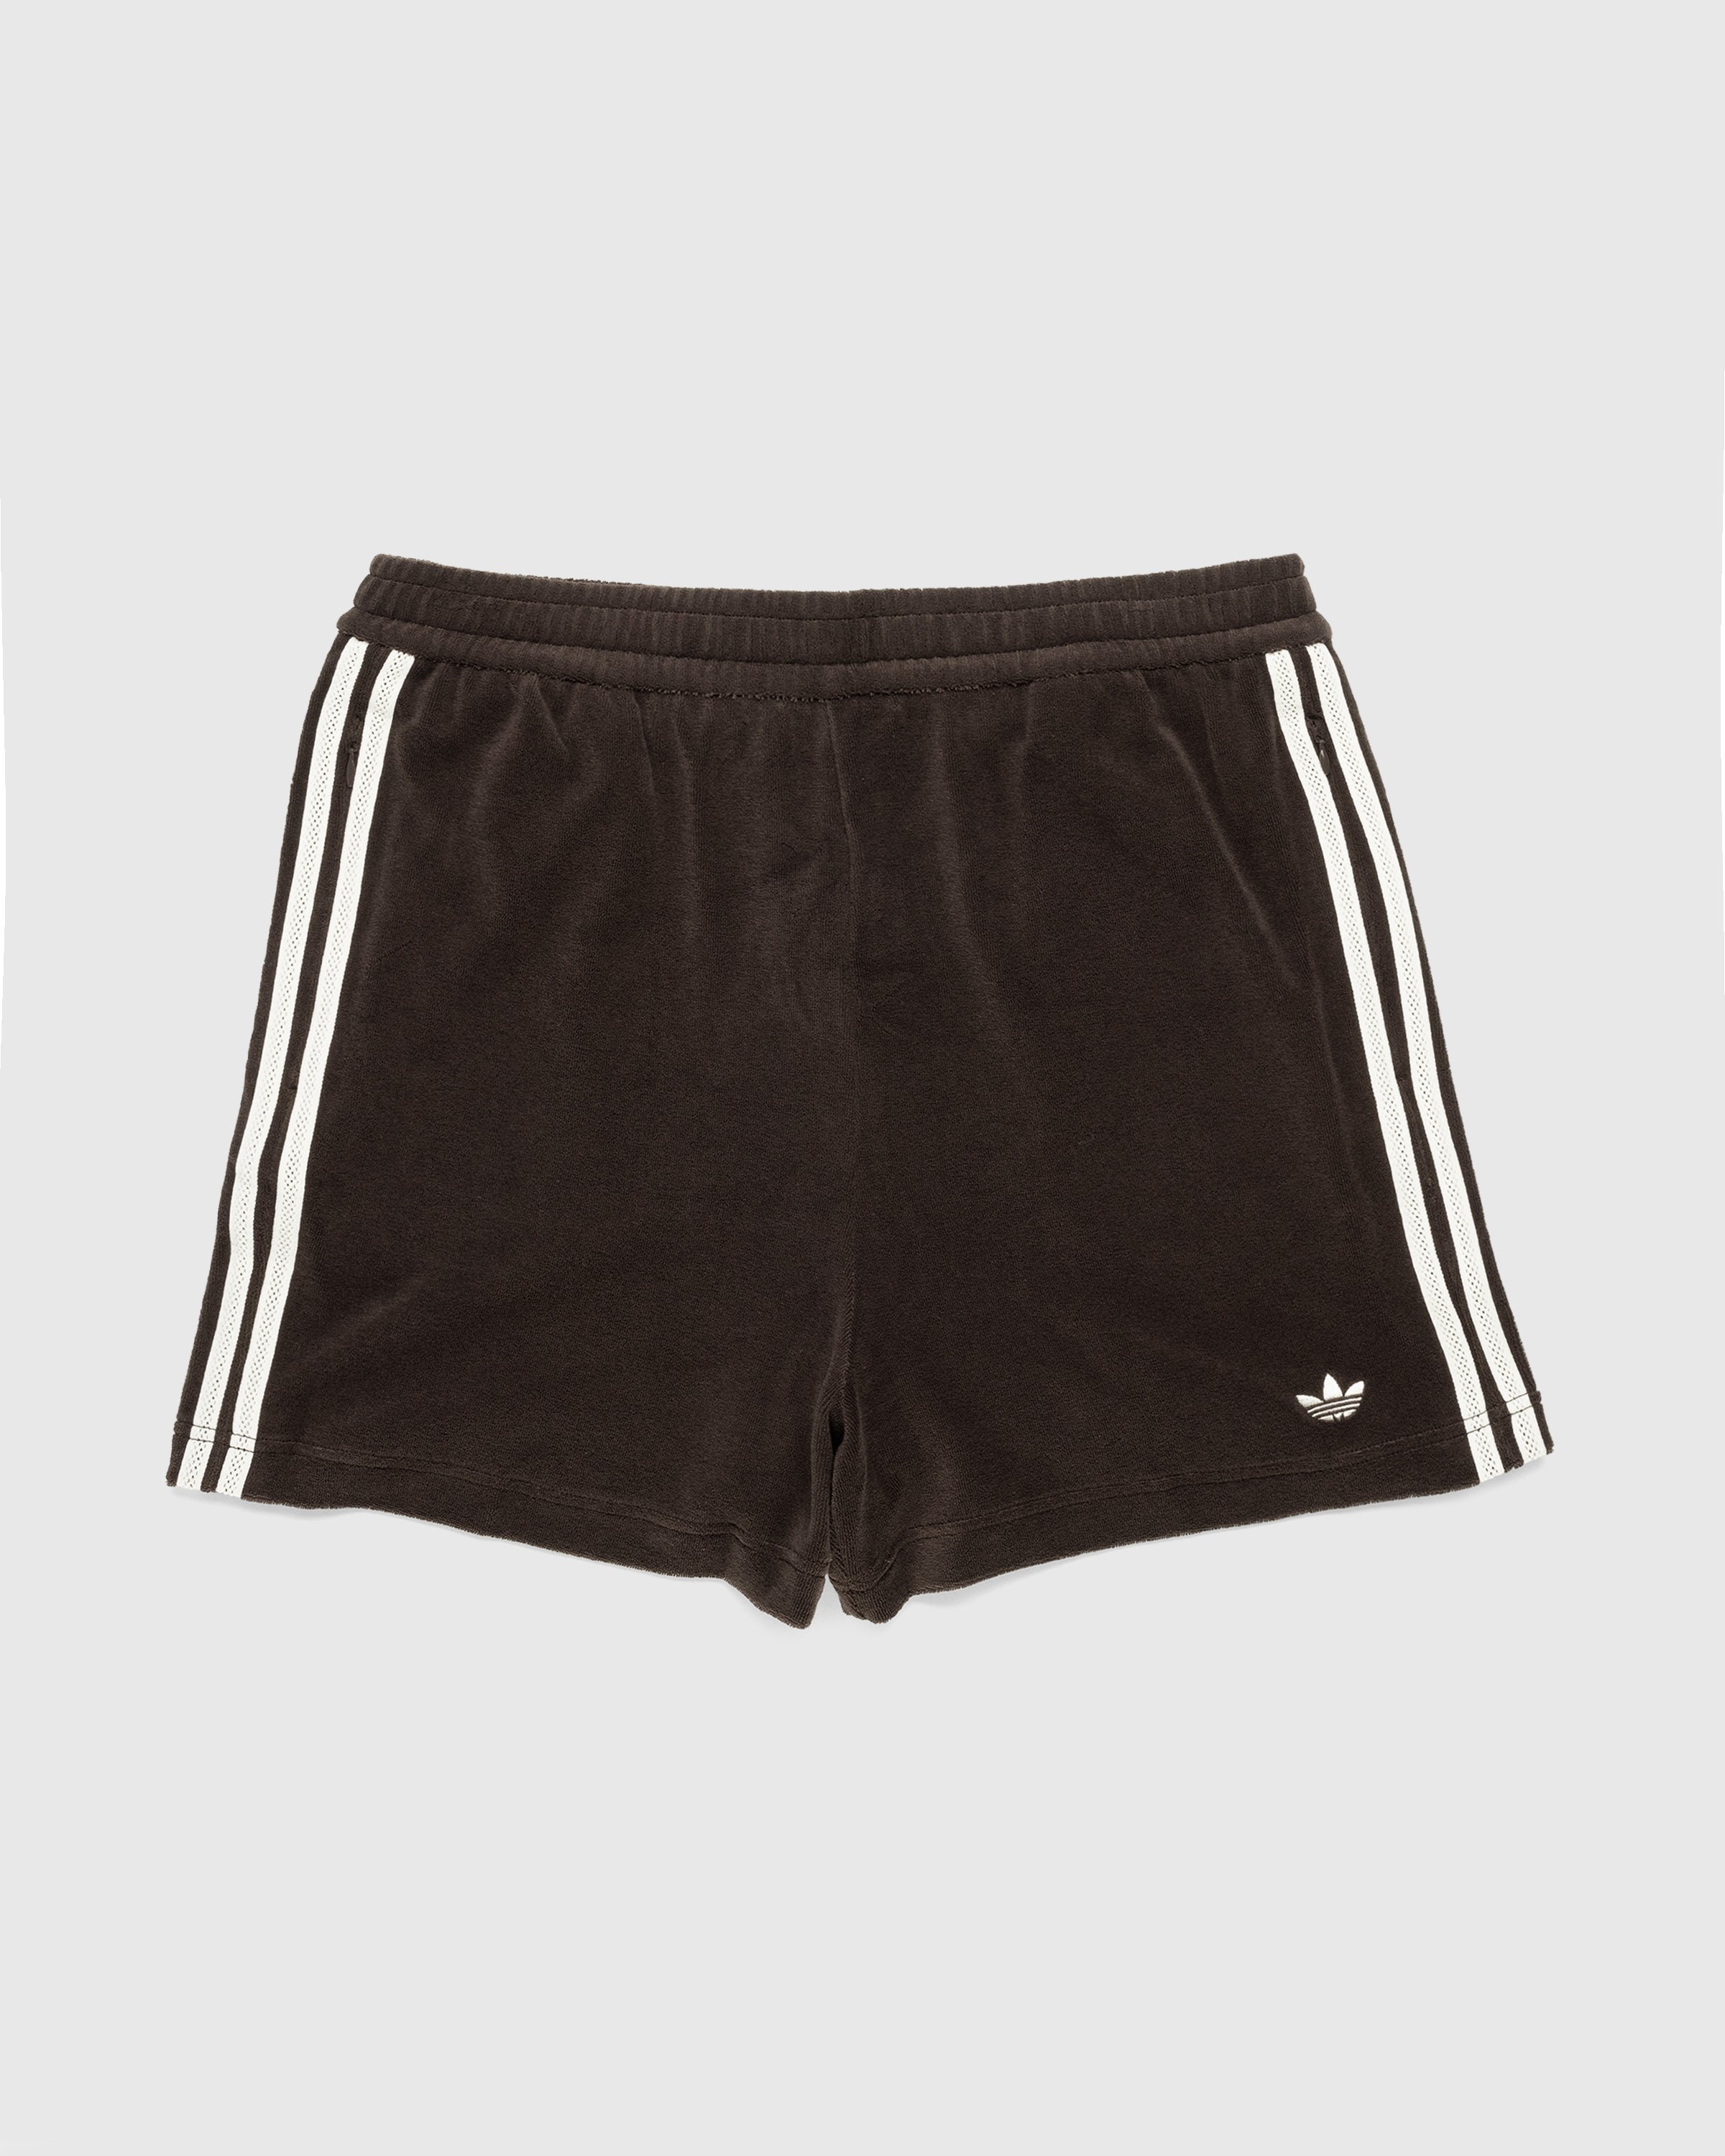 Adidas x Wales Bonner - Cotton Blend Shorts Dark Brown - Clothing - Brown - Image 1